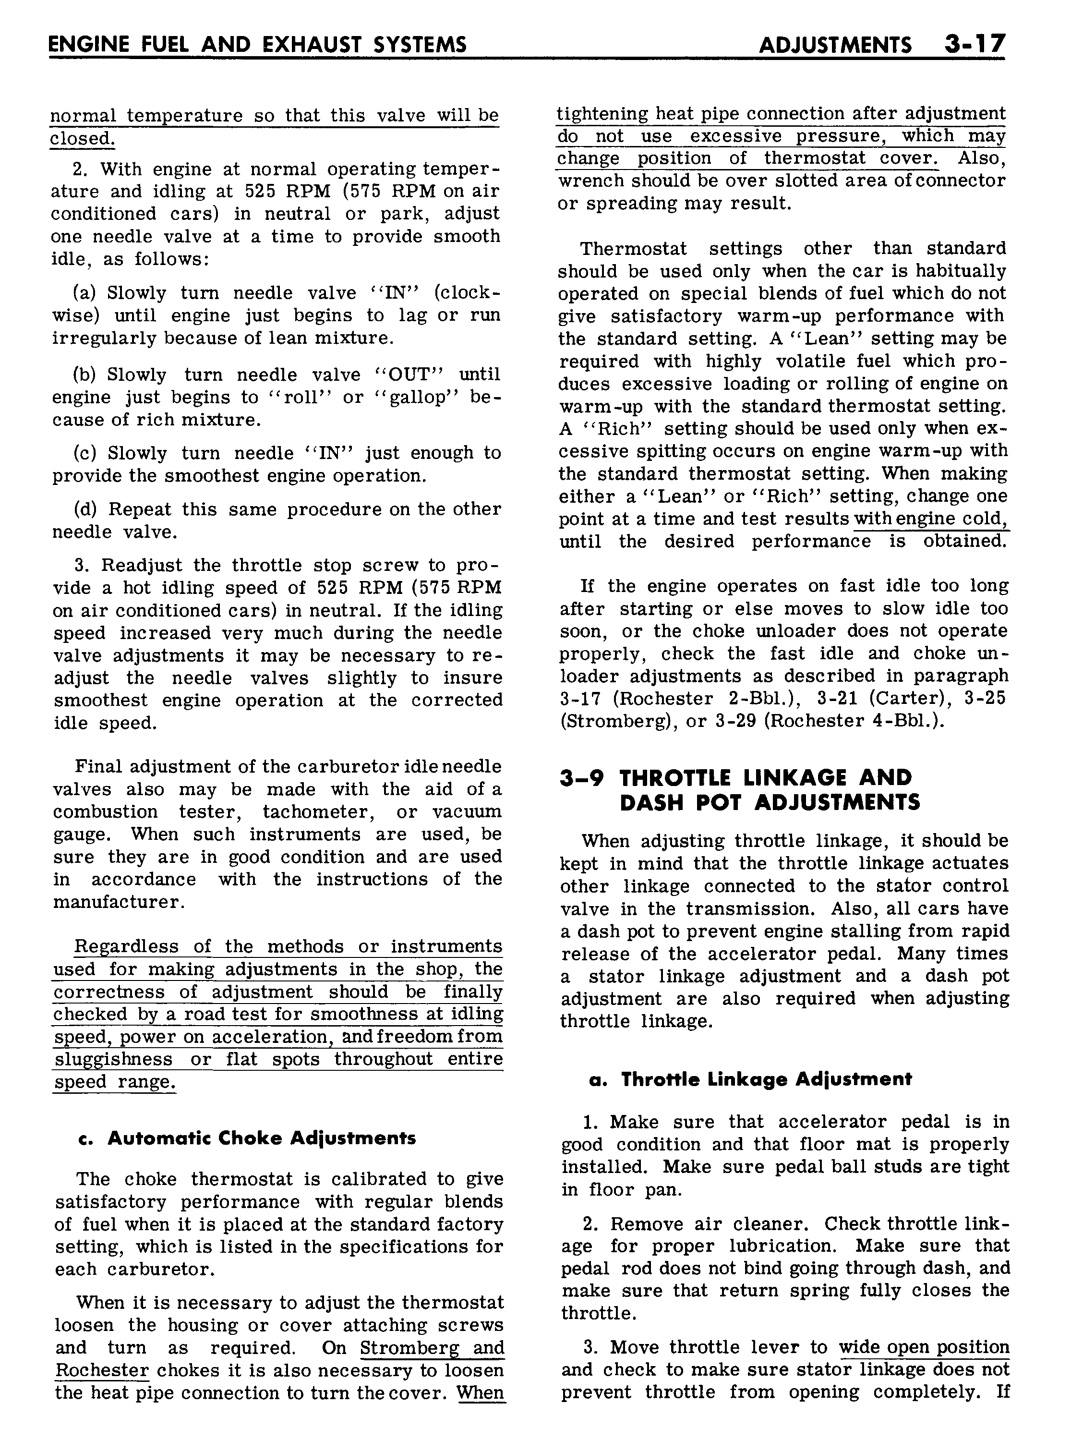 n_04 1961 Buick Shop Manual - Engine Fuel & Exhaust-017-017.jpg